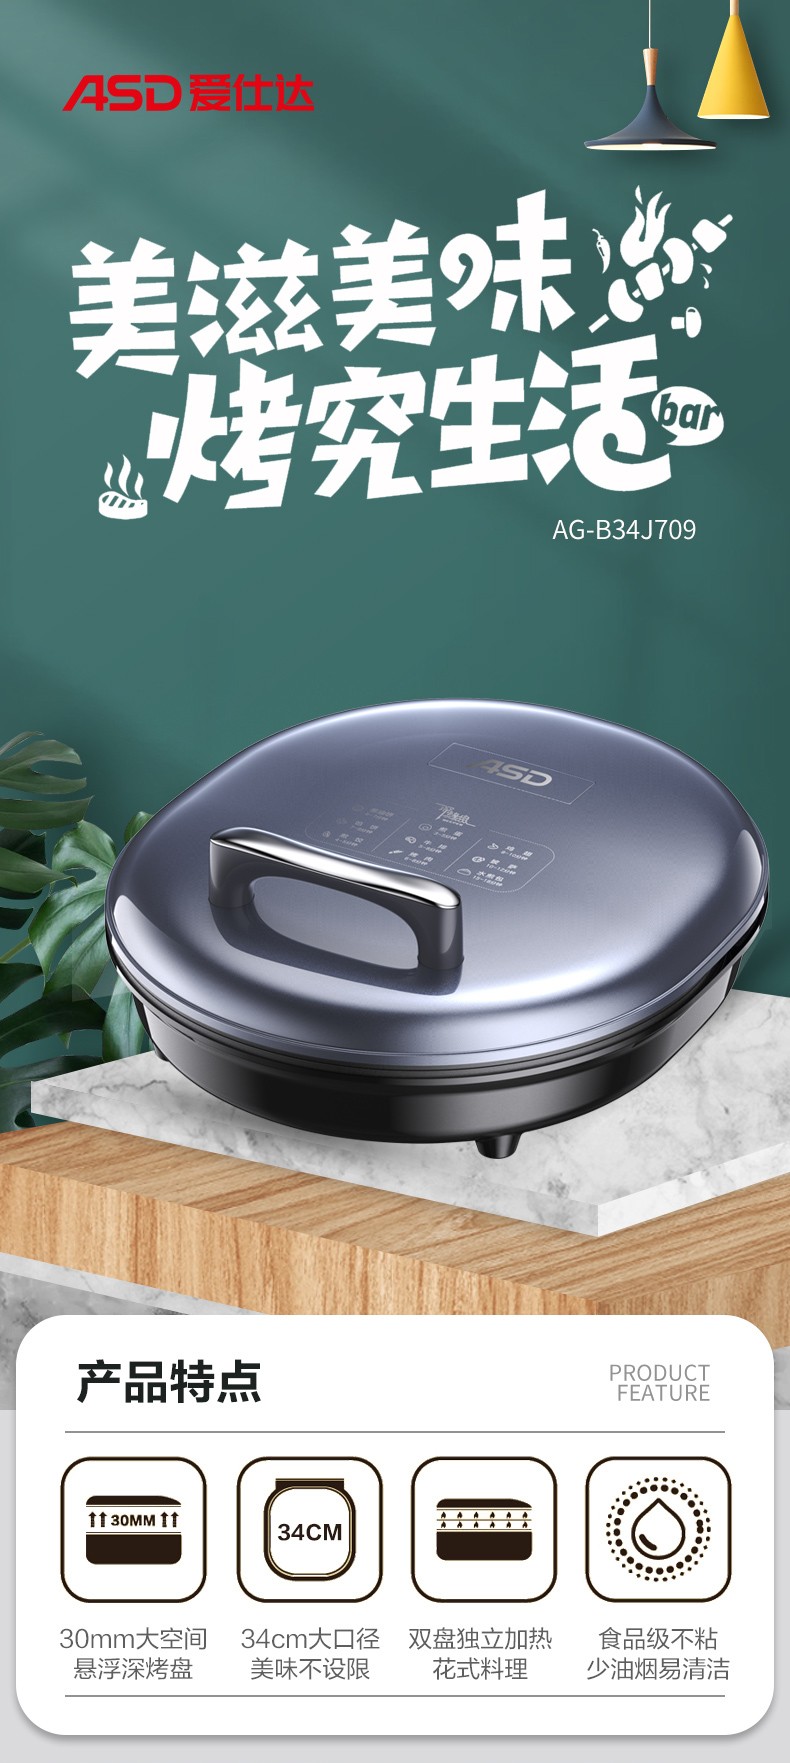 ASD/爱仕达AG-B34J709电饼铛悬浮式双面加热烙饼煎烤机34cm包邮